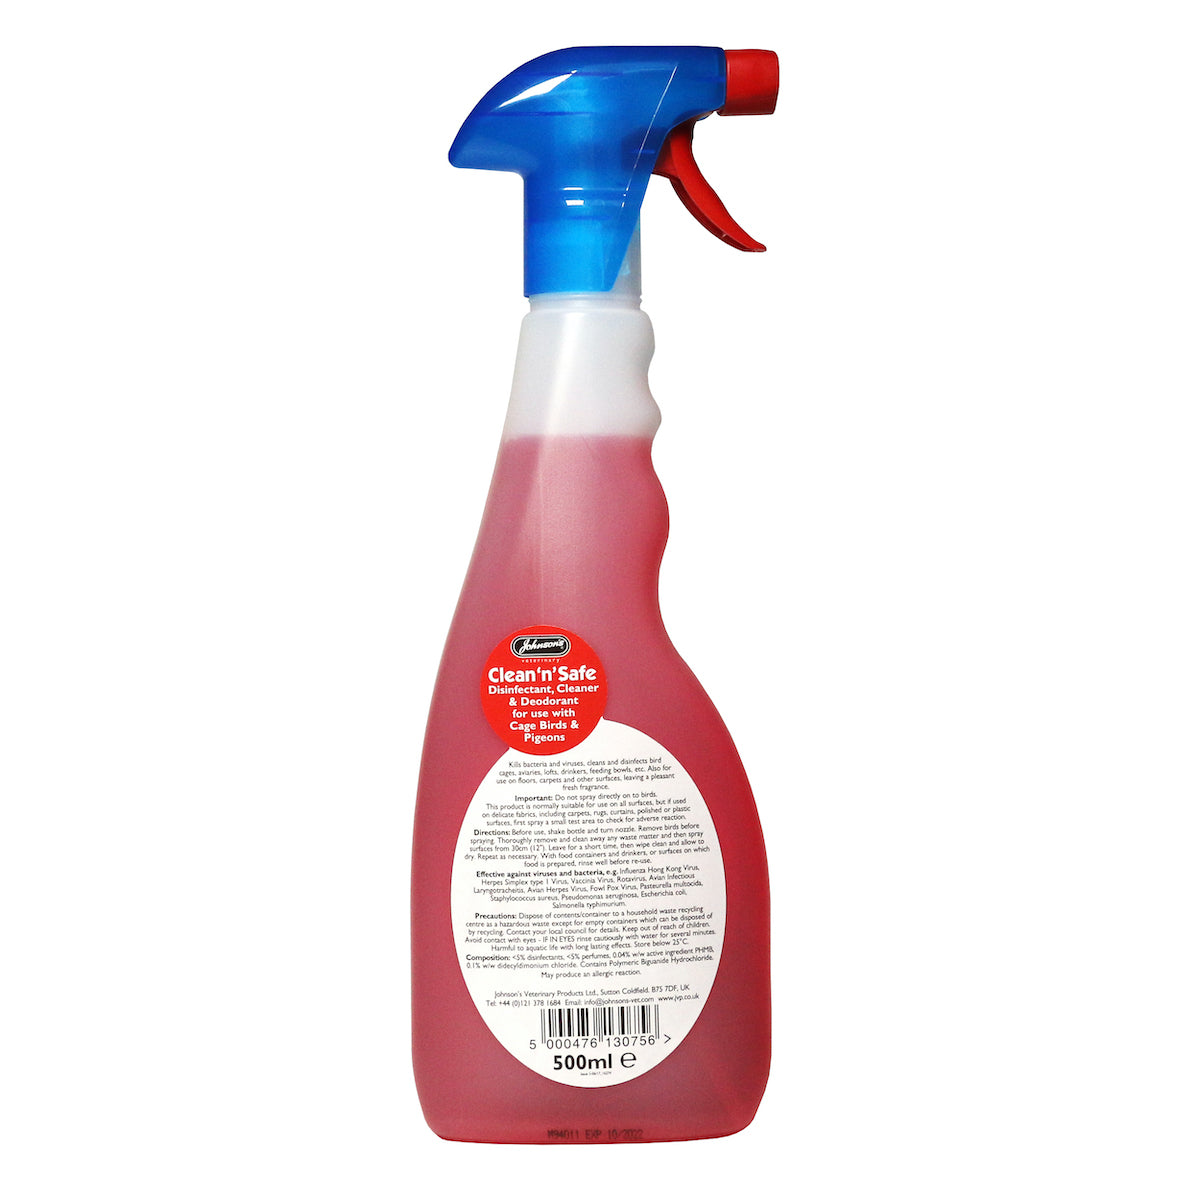 Johnson's - Clean 'n' Safe Bird Disinfectant (500ml)